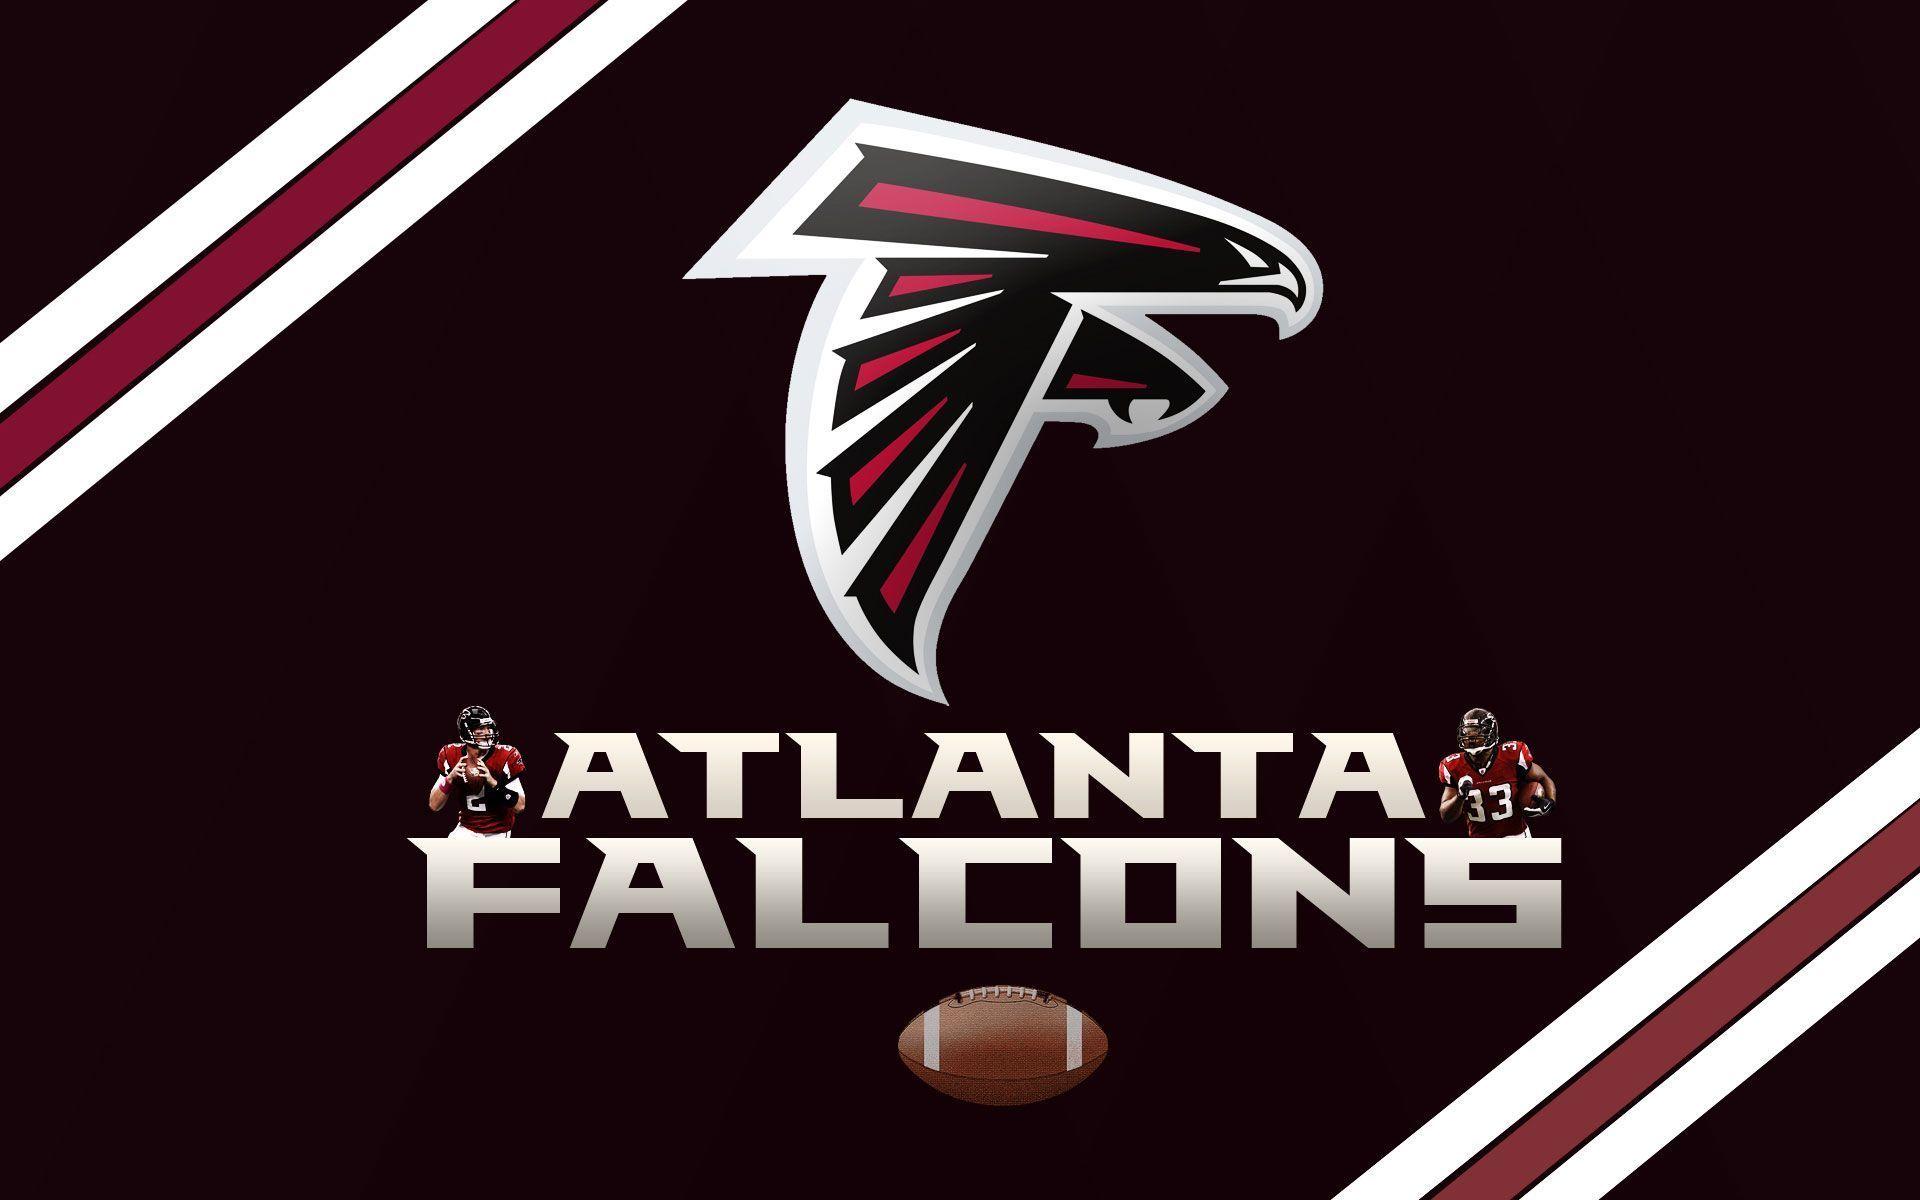 Atlanta Falcons wallpaper